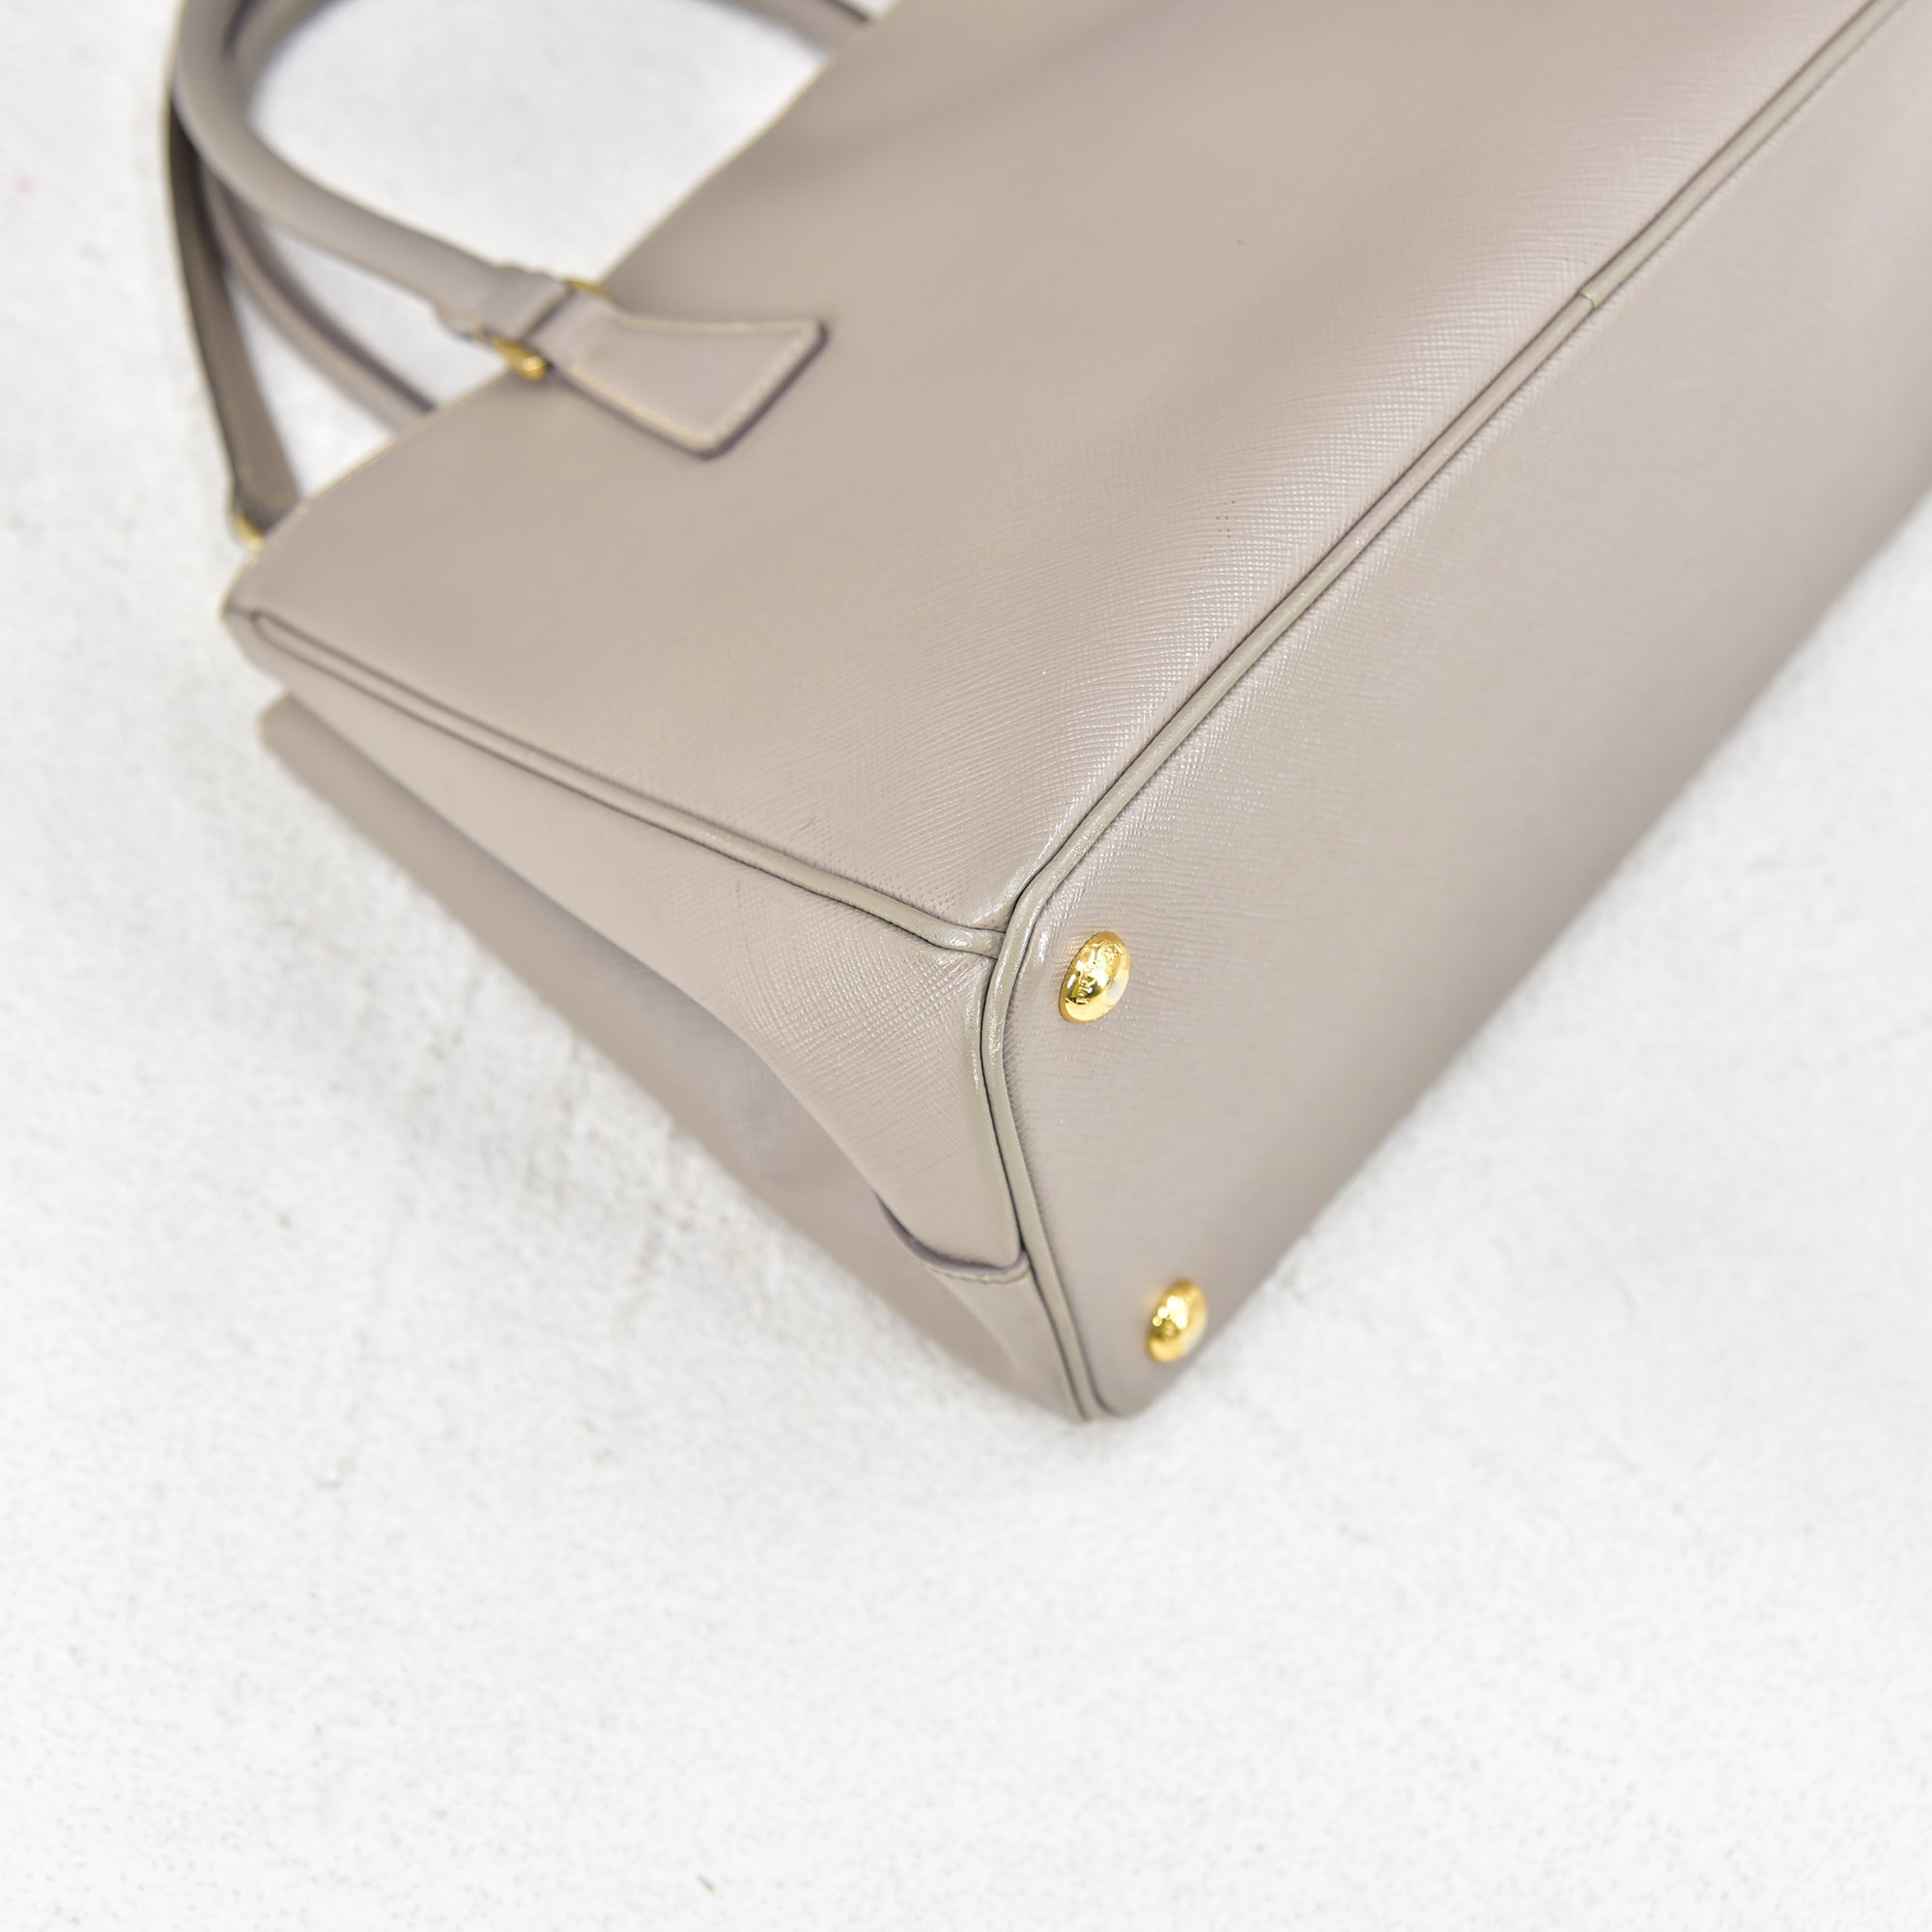 Saffiano Galleria Double Zip Bag